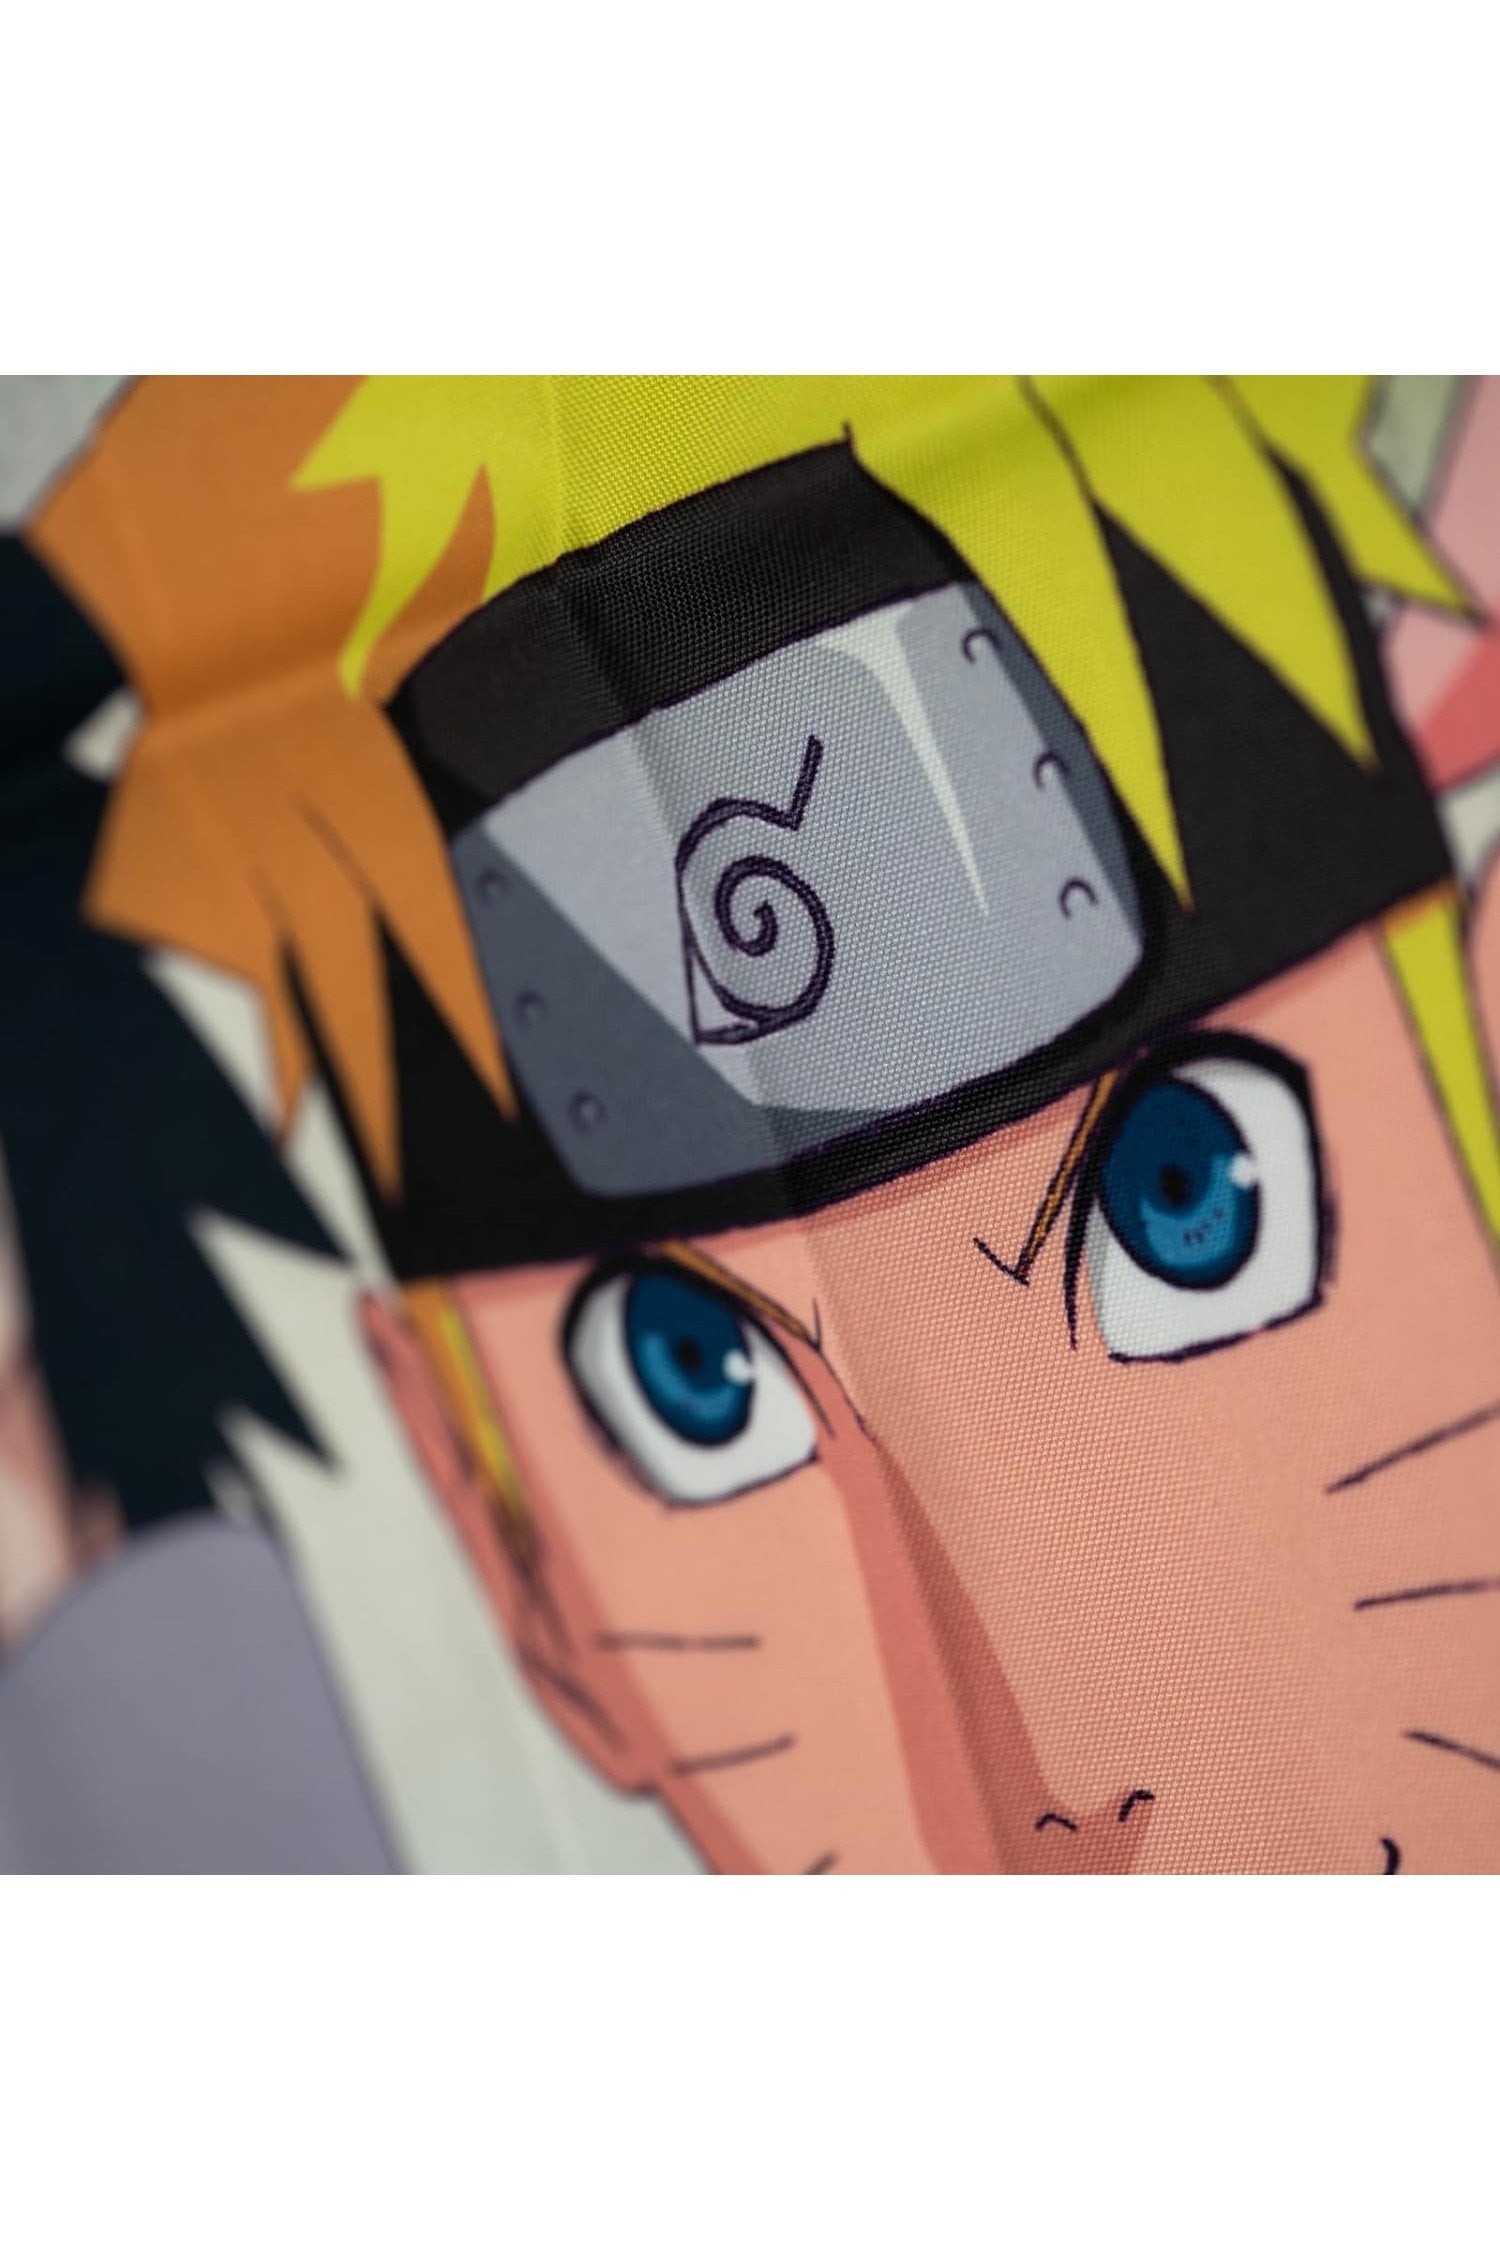 Naruto Shippuden Decorative Scroll Flag